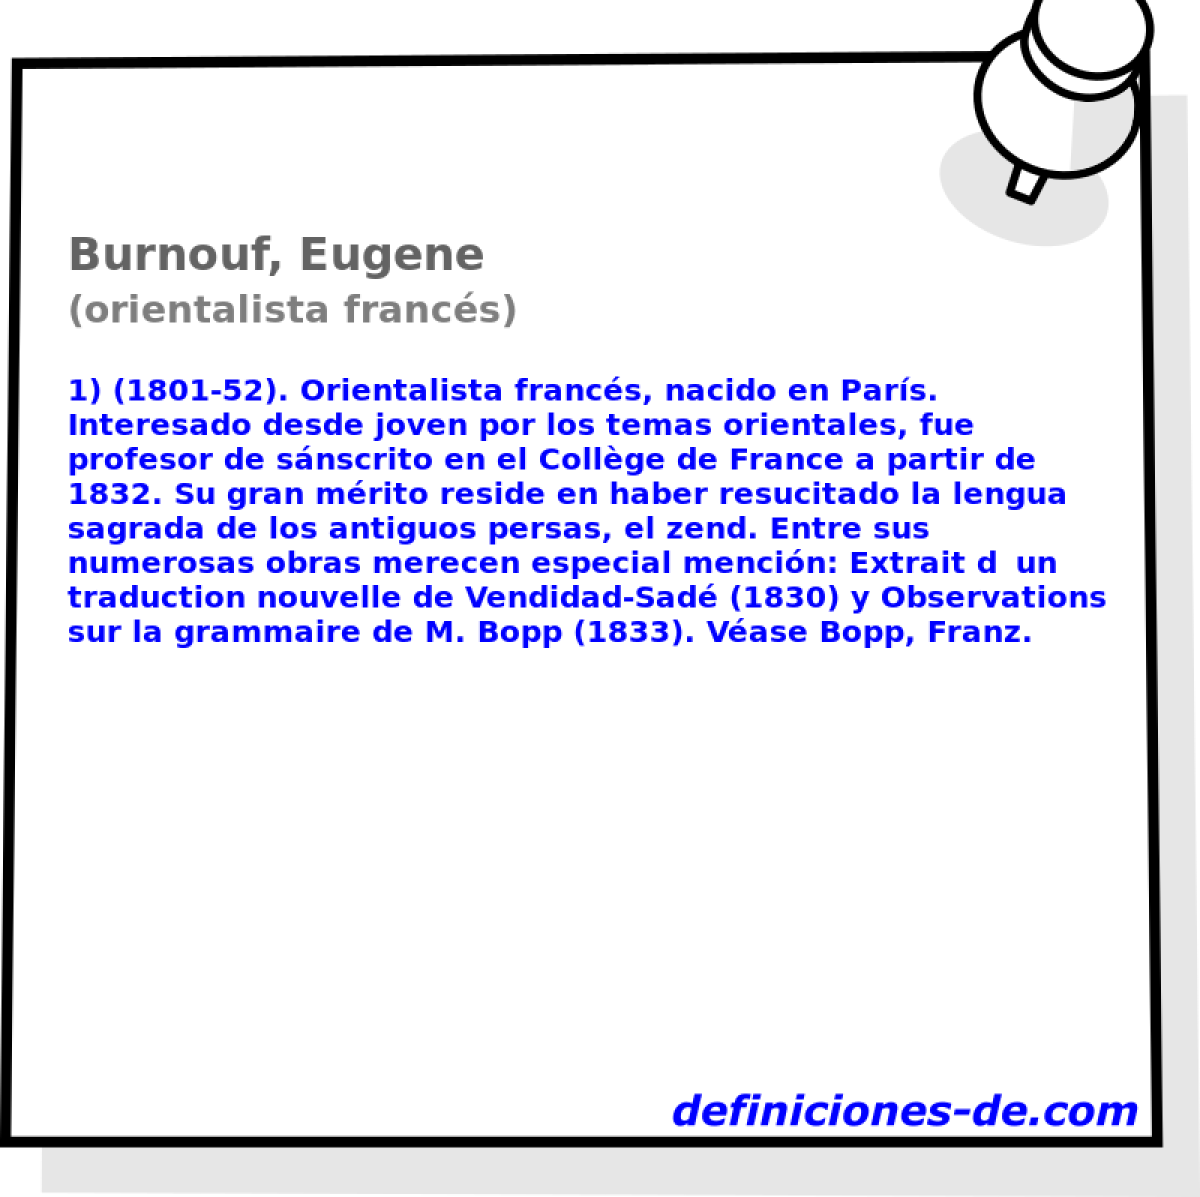 Burnouf, Eugene (orientalista francs)